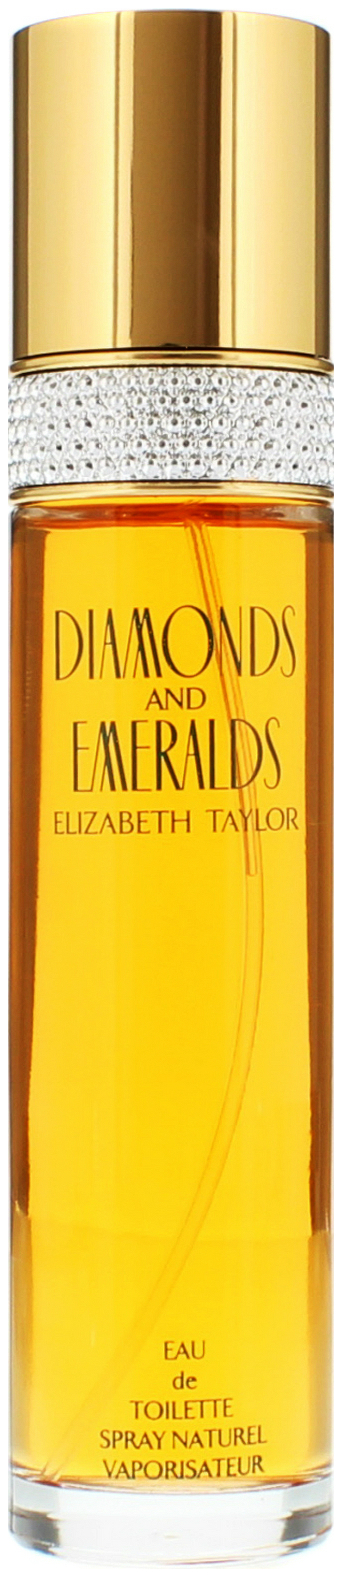 Туалетная вода Elizabeth Taylor Diamonds And Emeralds 100 мл converse chuck taylor all star oaks a04546cphantom violet